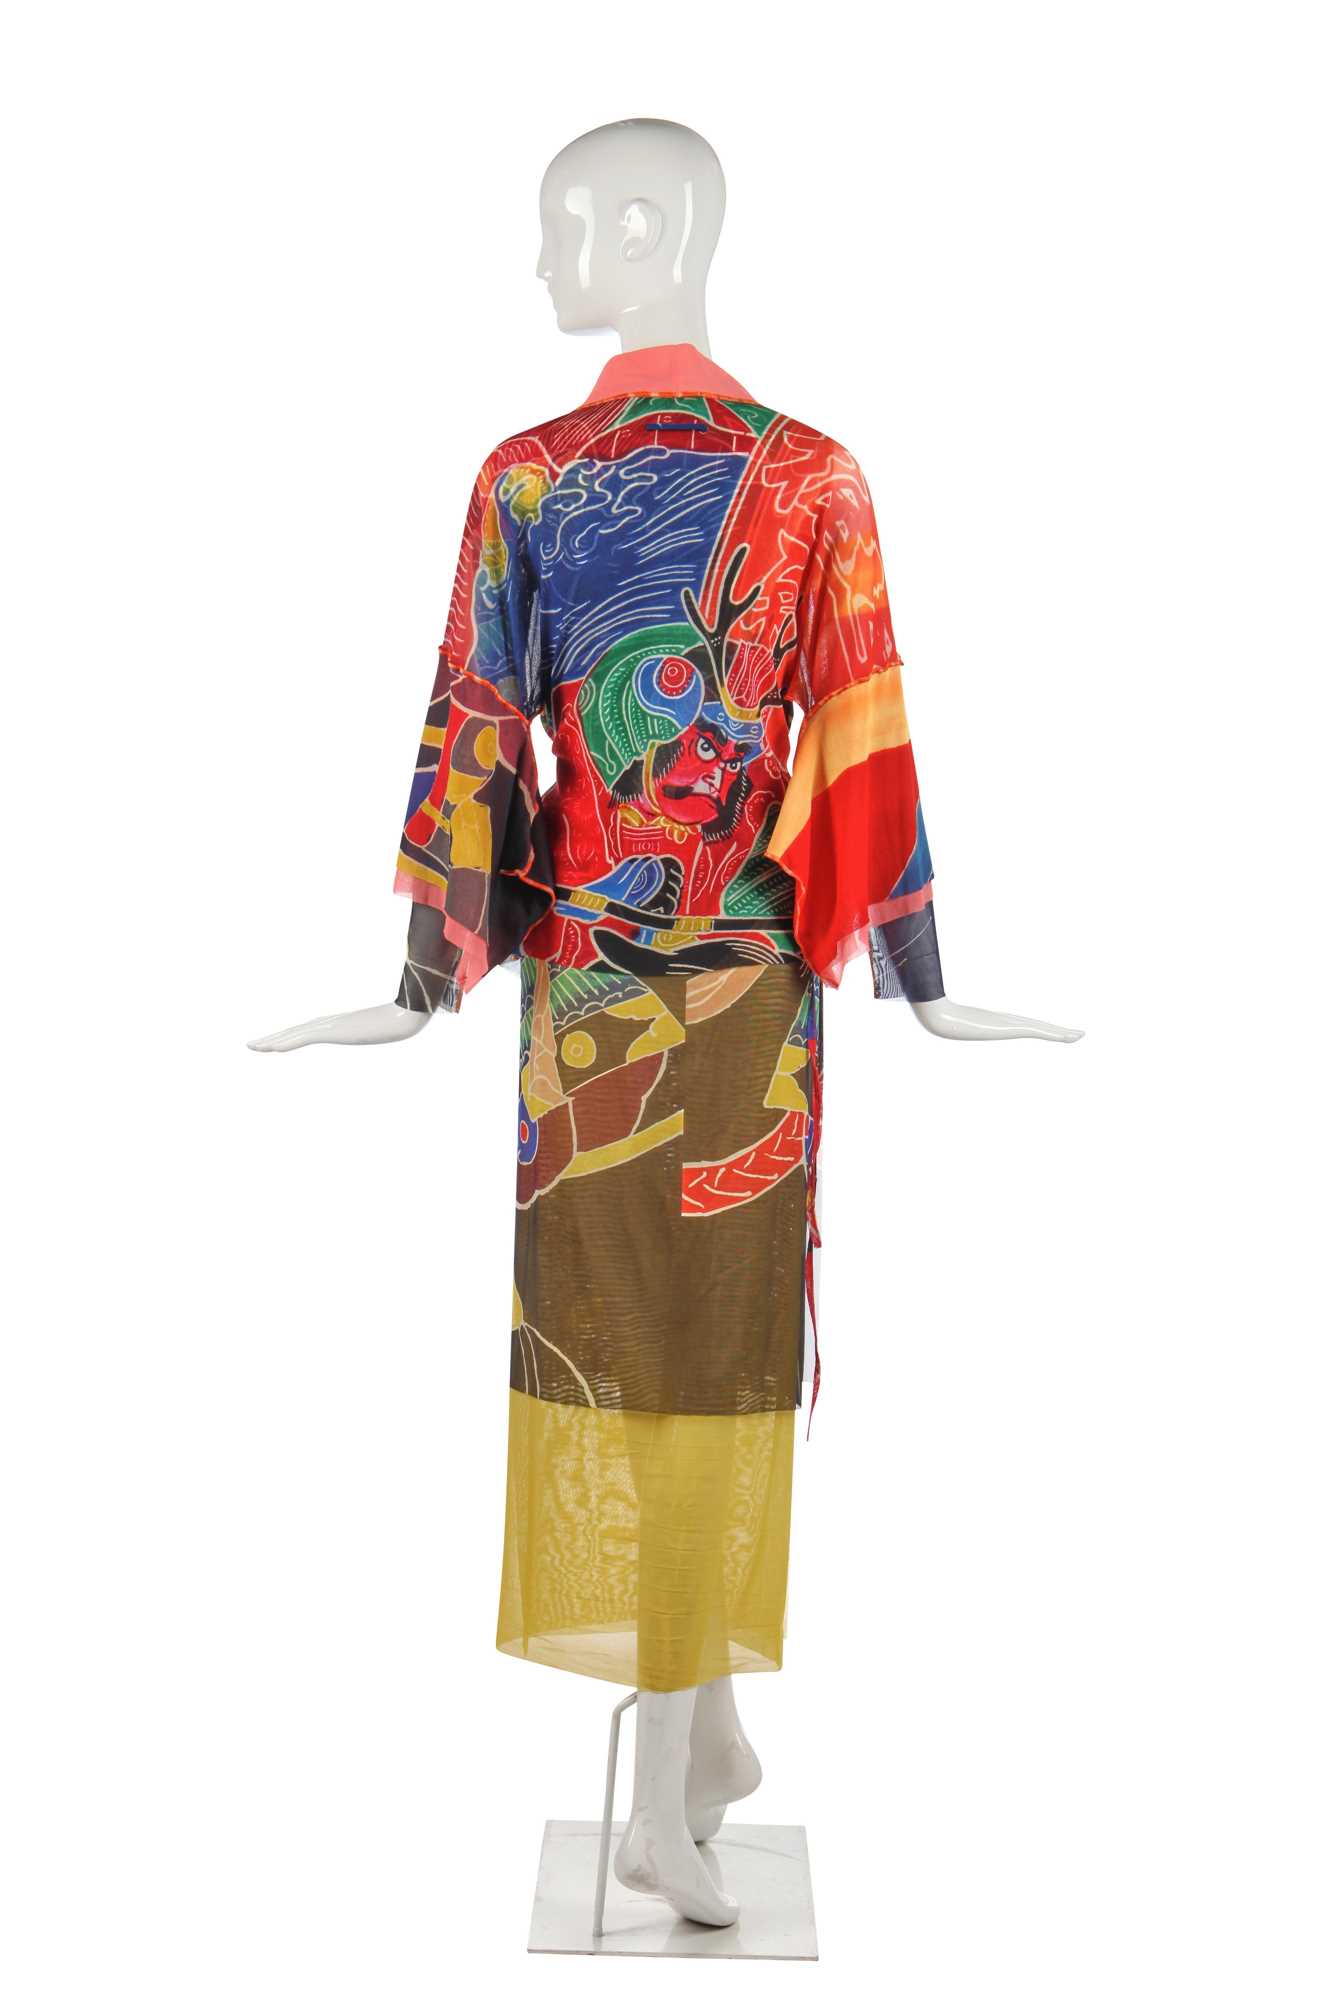 Lot 383 - A Jean Paul Gaultier Kabuki-inspired ensemble, Spring-Summer 1999 collection